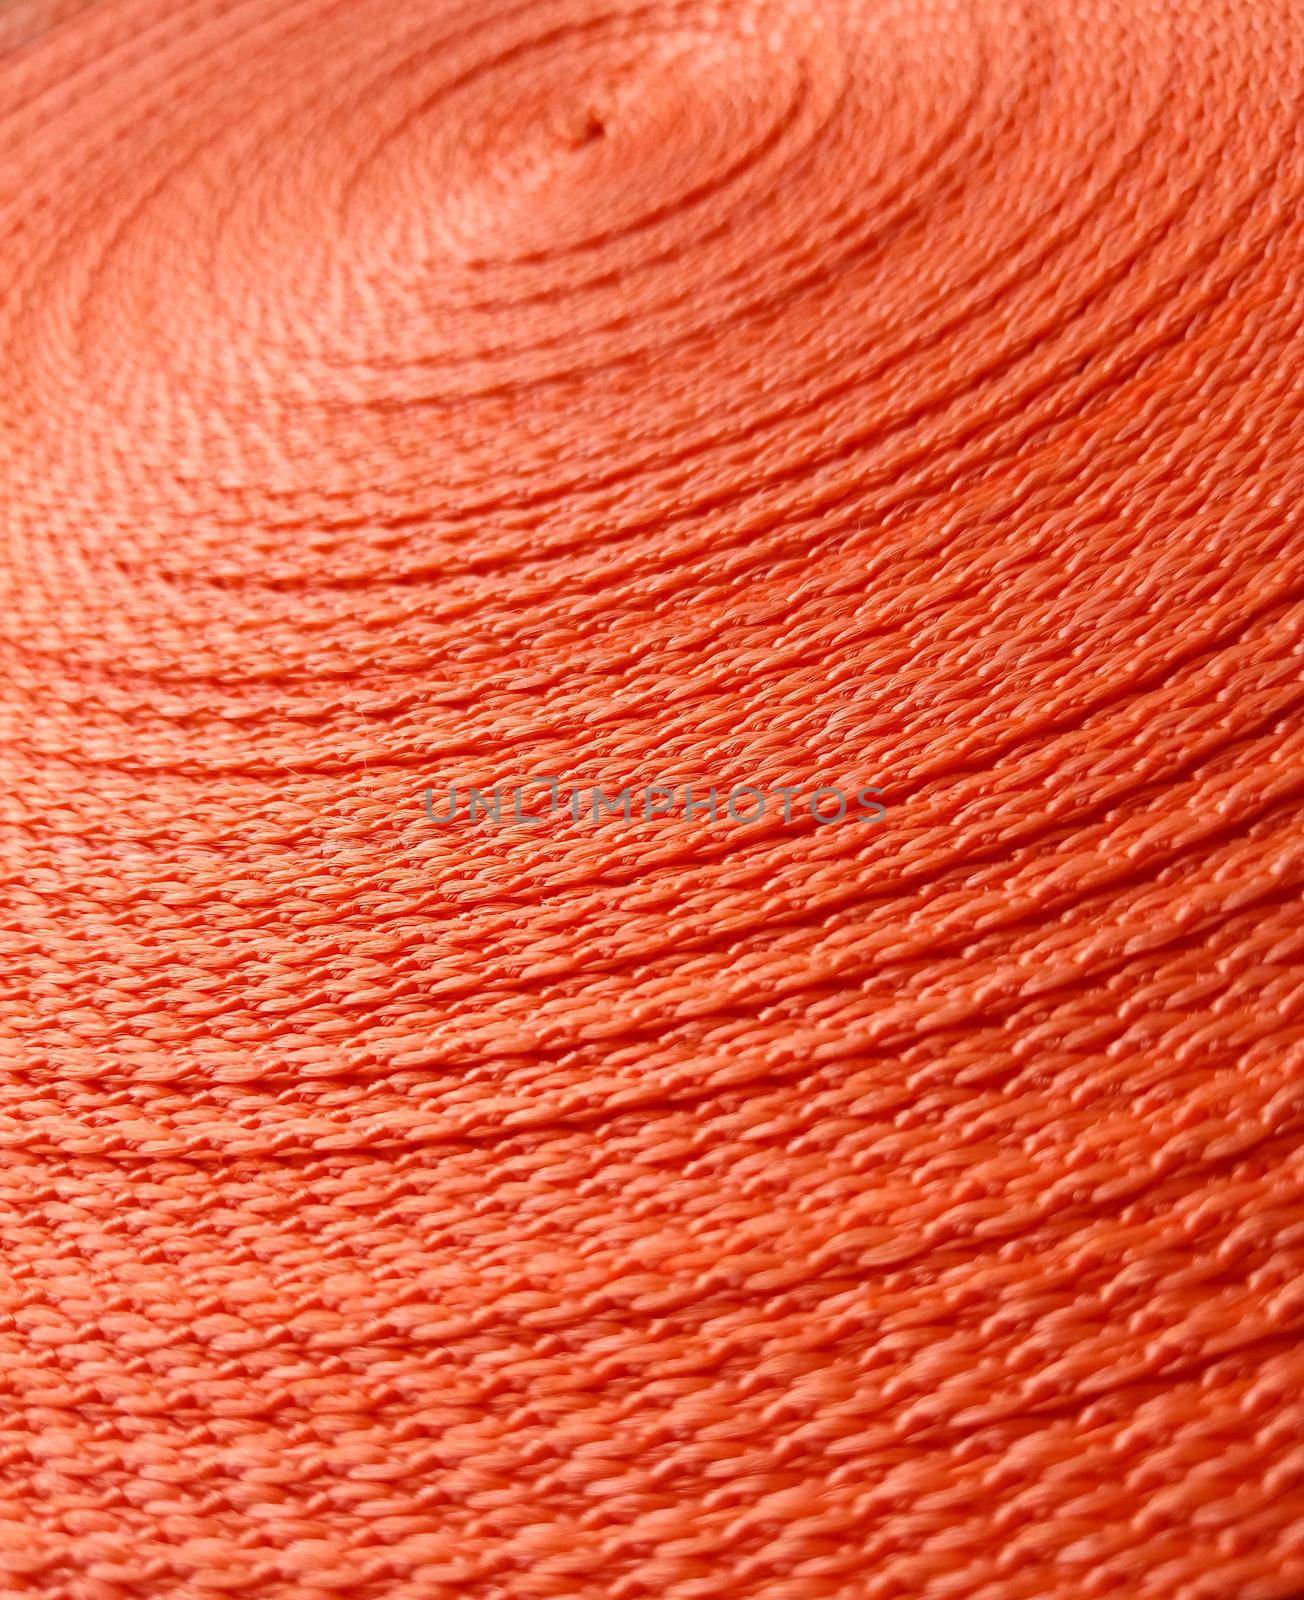 Orange abstract background. Circular pattern of orange sling by lapushka62